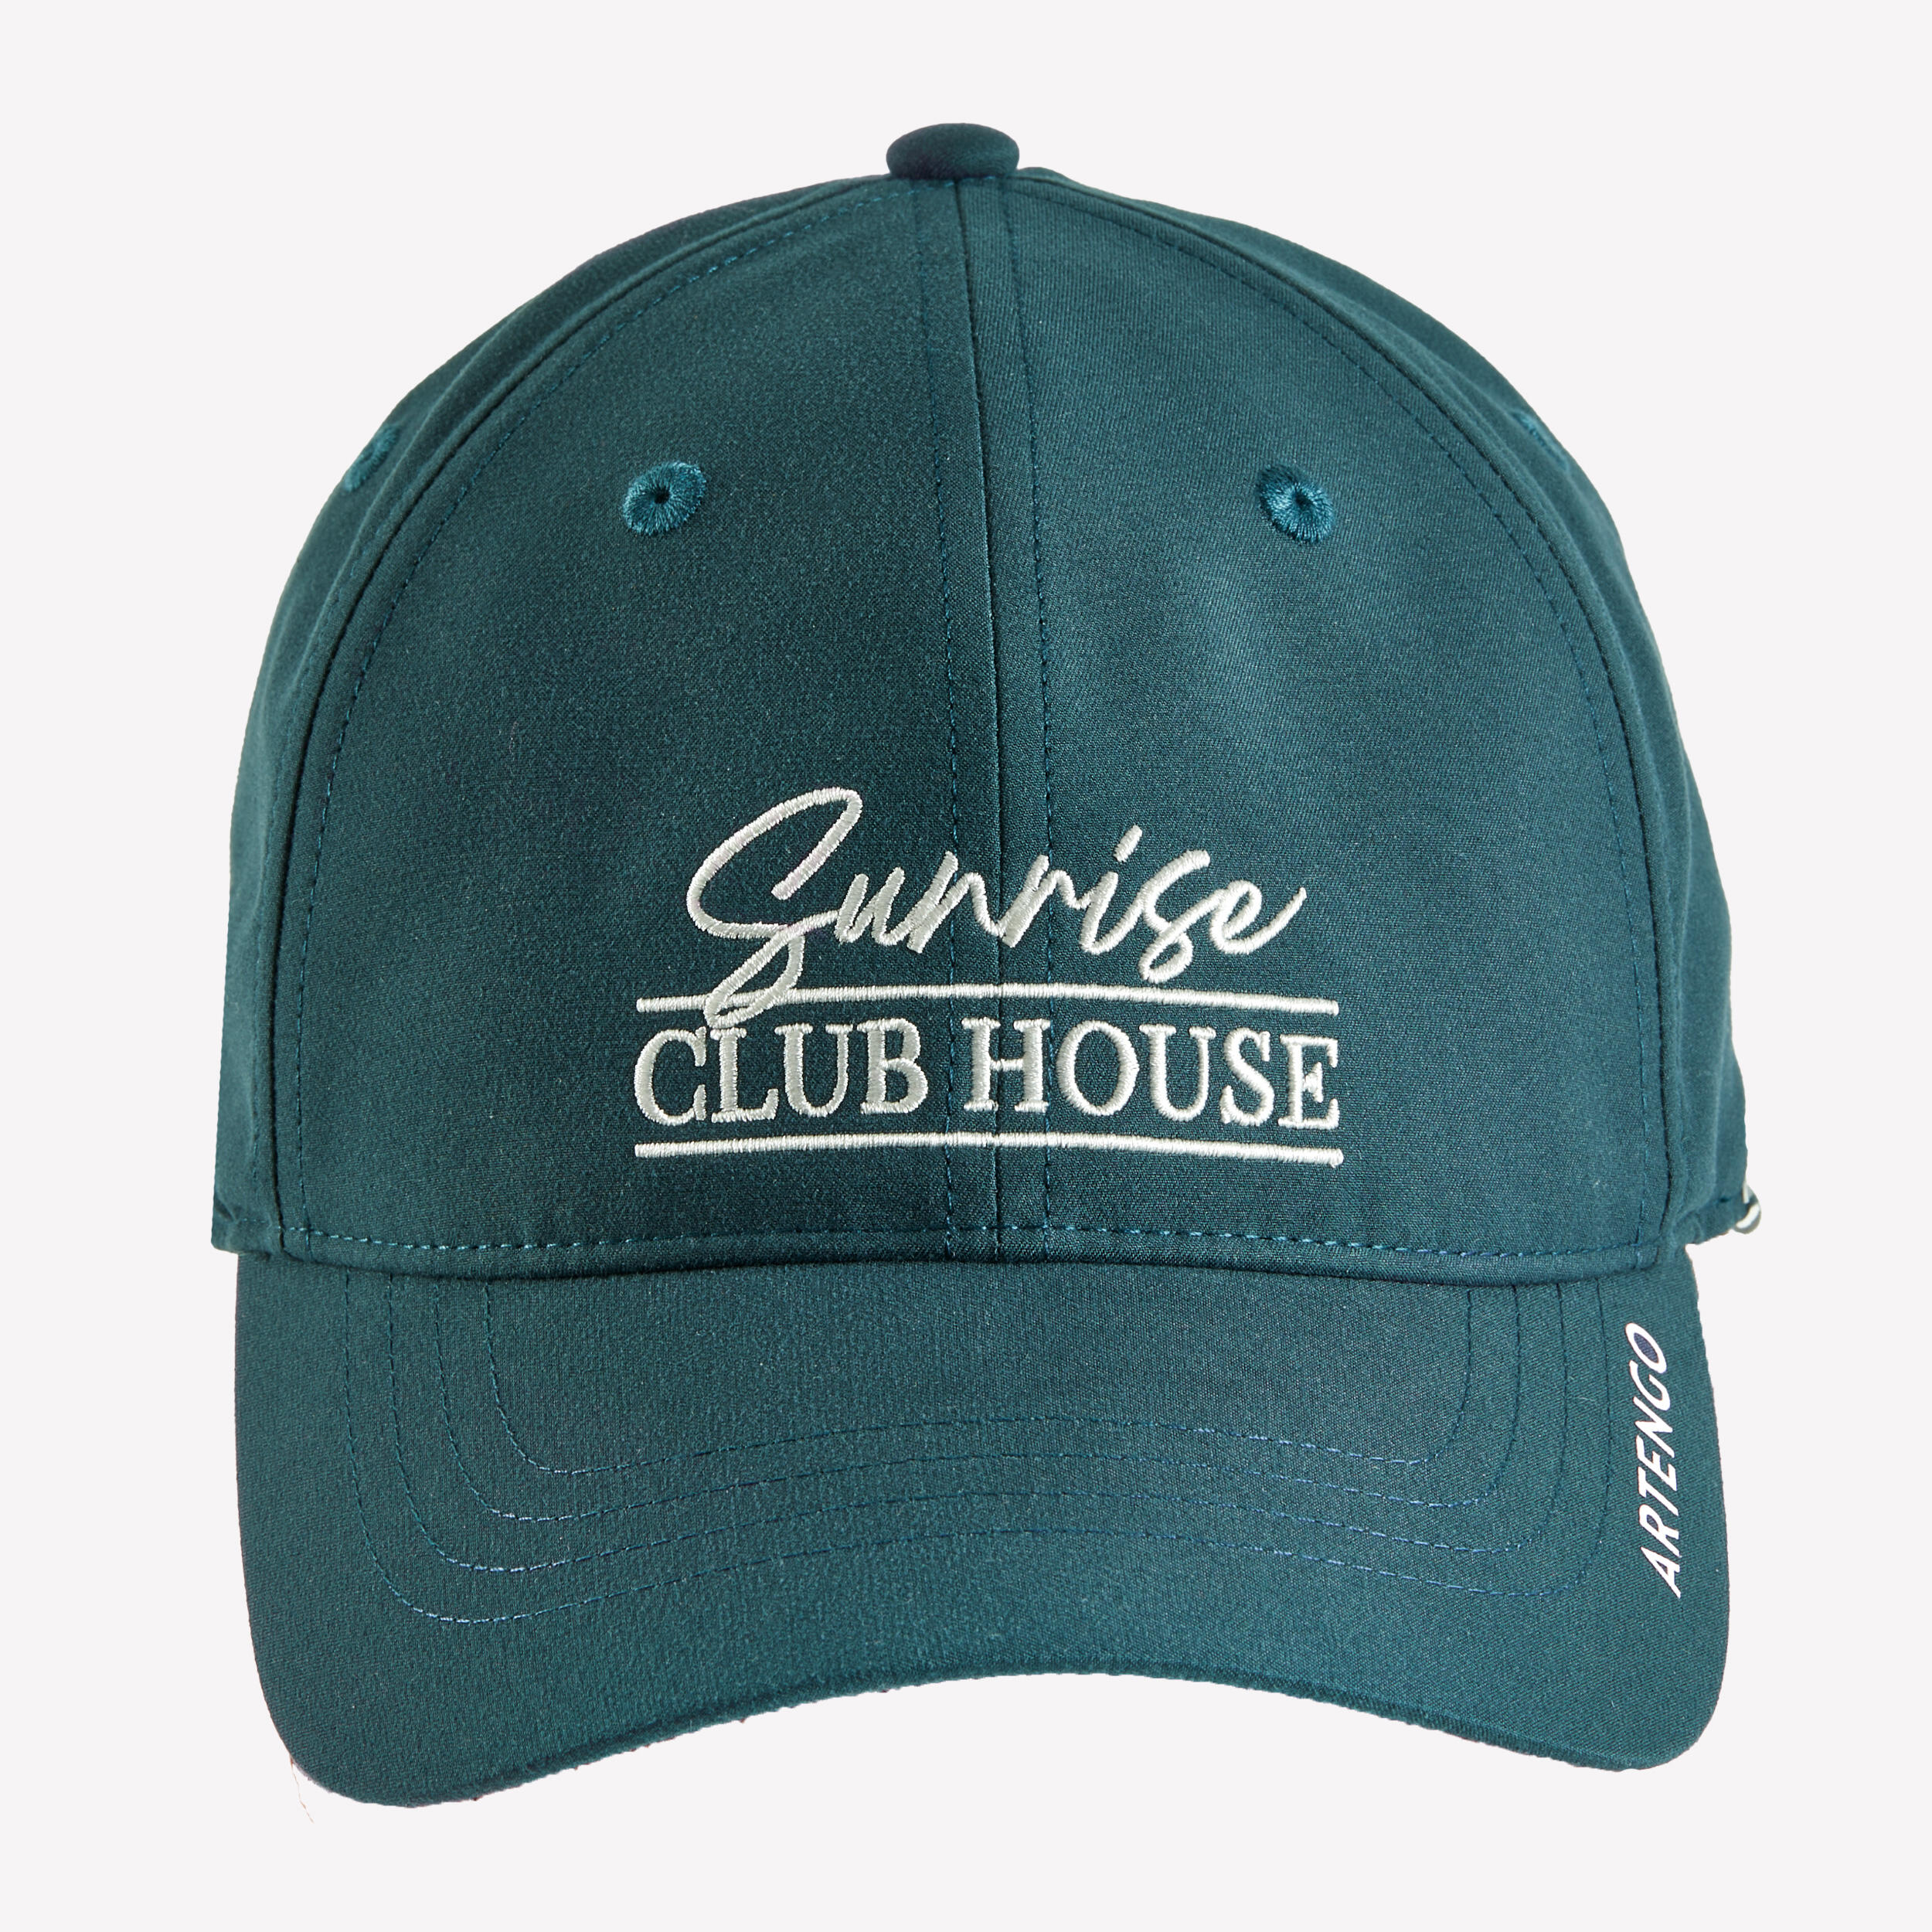 Tennis Cap Size 58 TC 500 - Pine Green 3/4